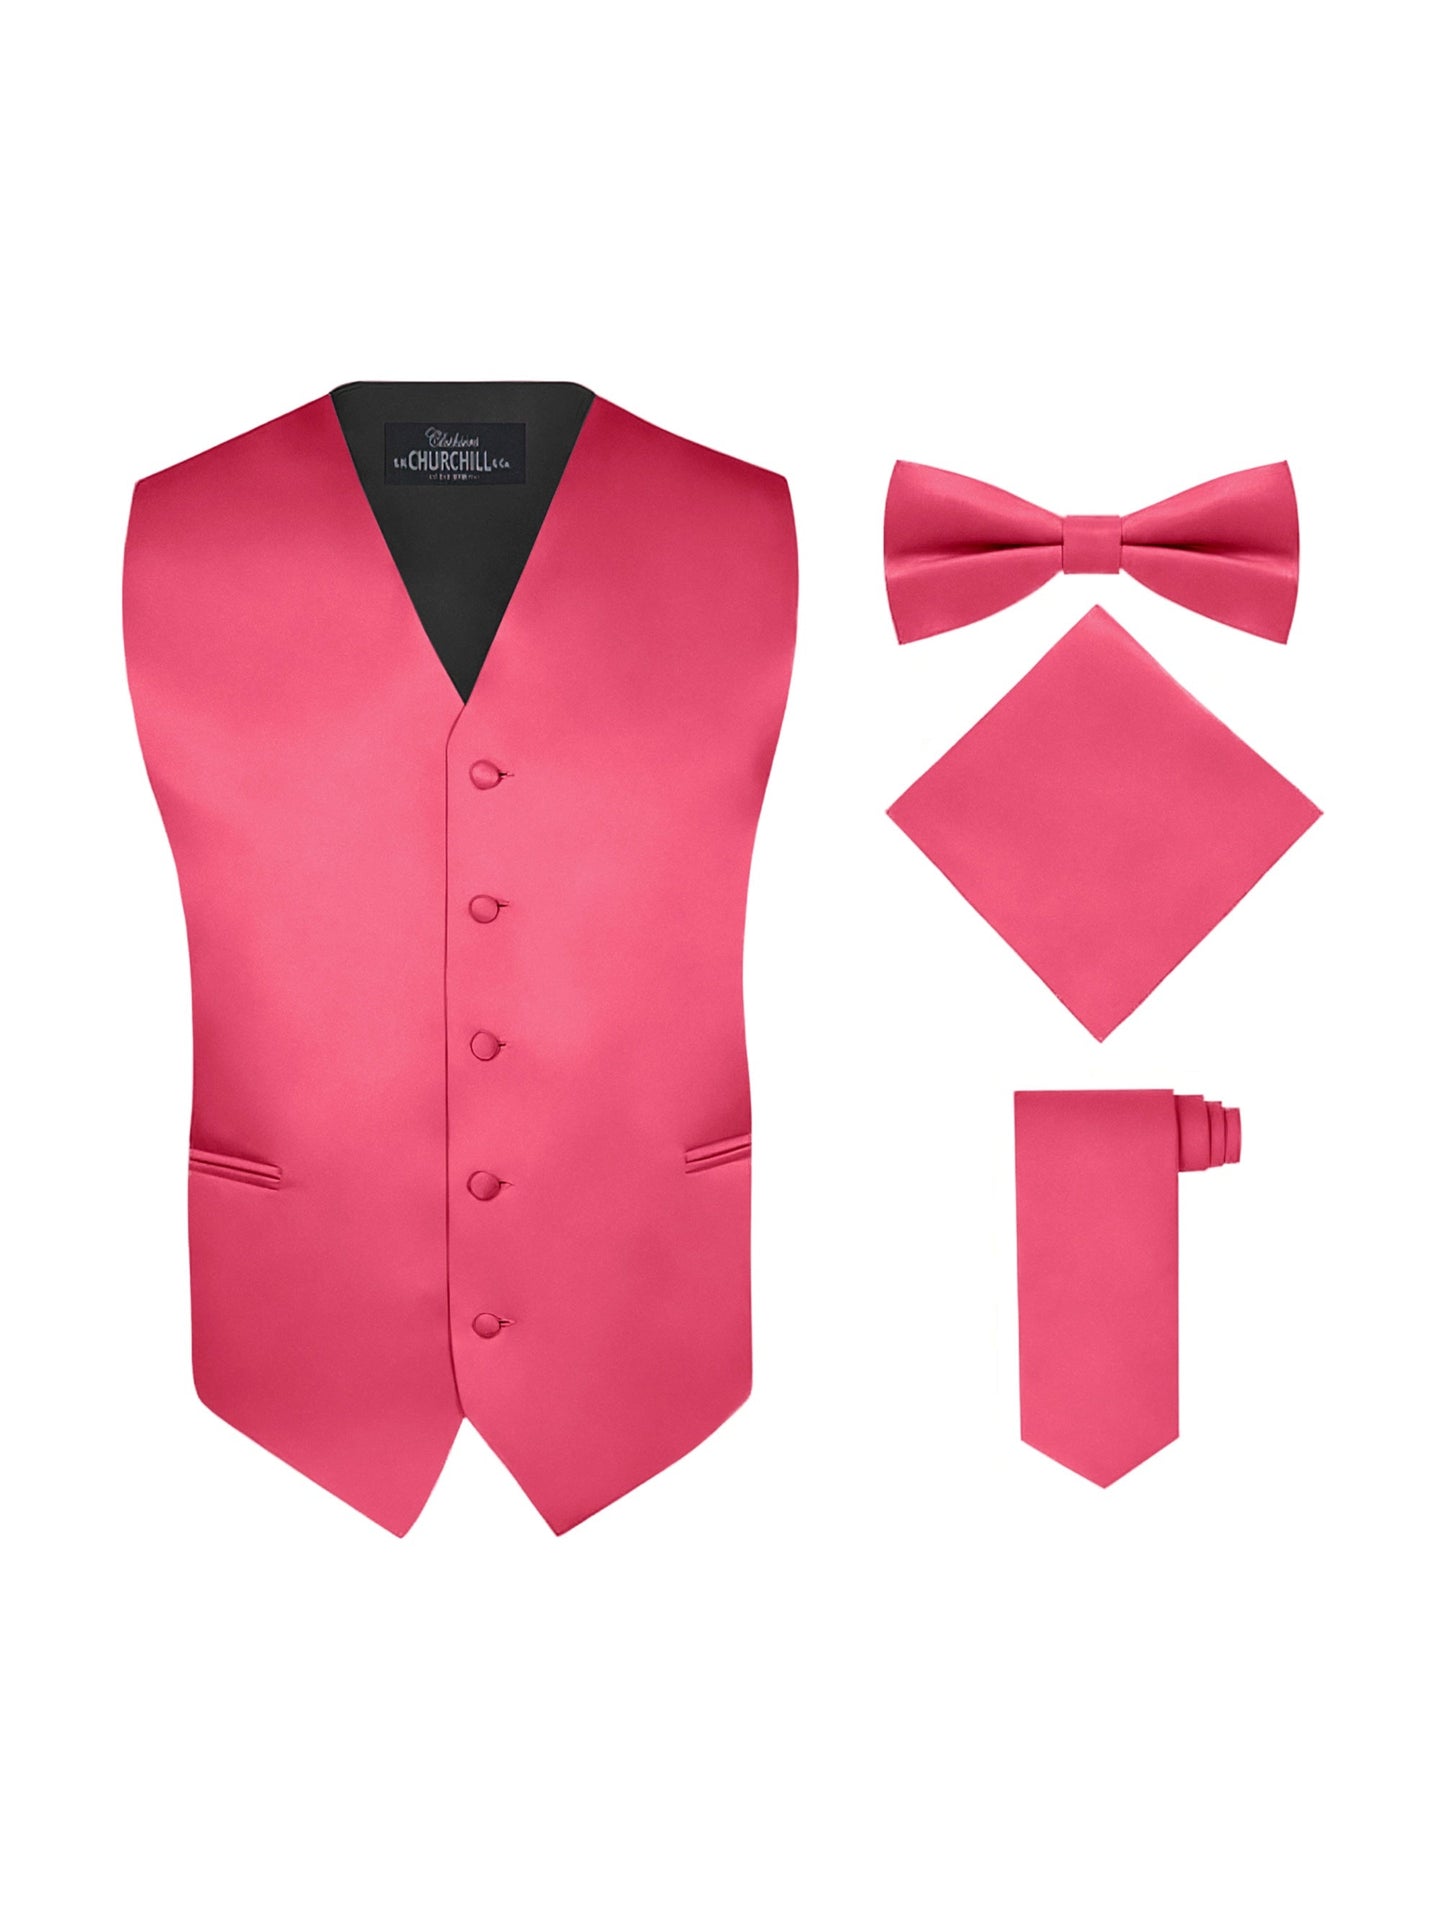 S.H. Churchill & Co. Men's 4 Piece Hot Pink Vest Set, with Bow Tie, Neck Tie & Pocket Hankie